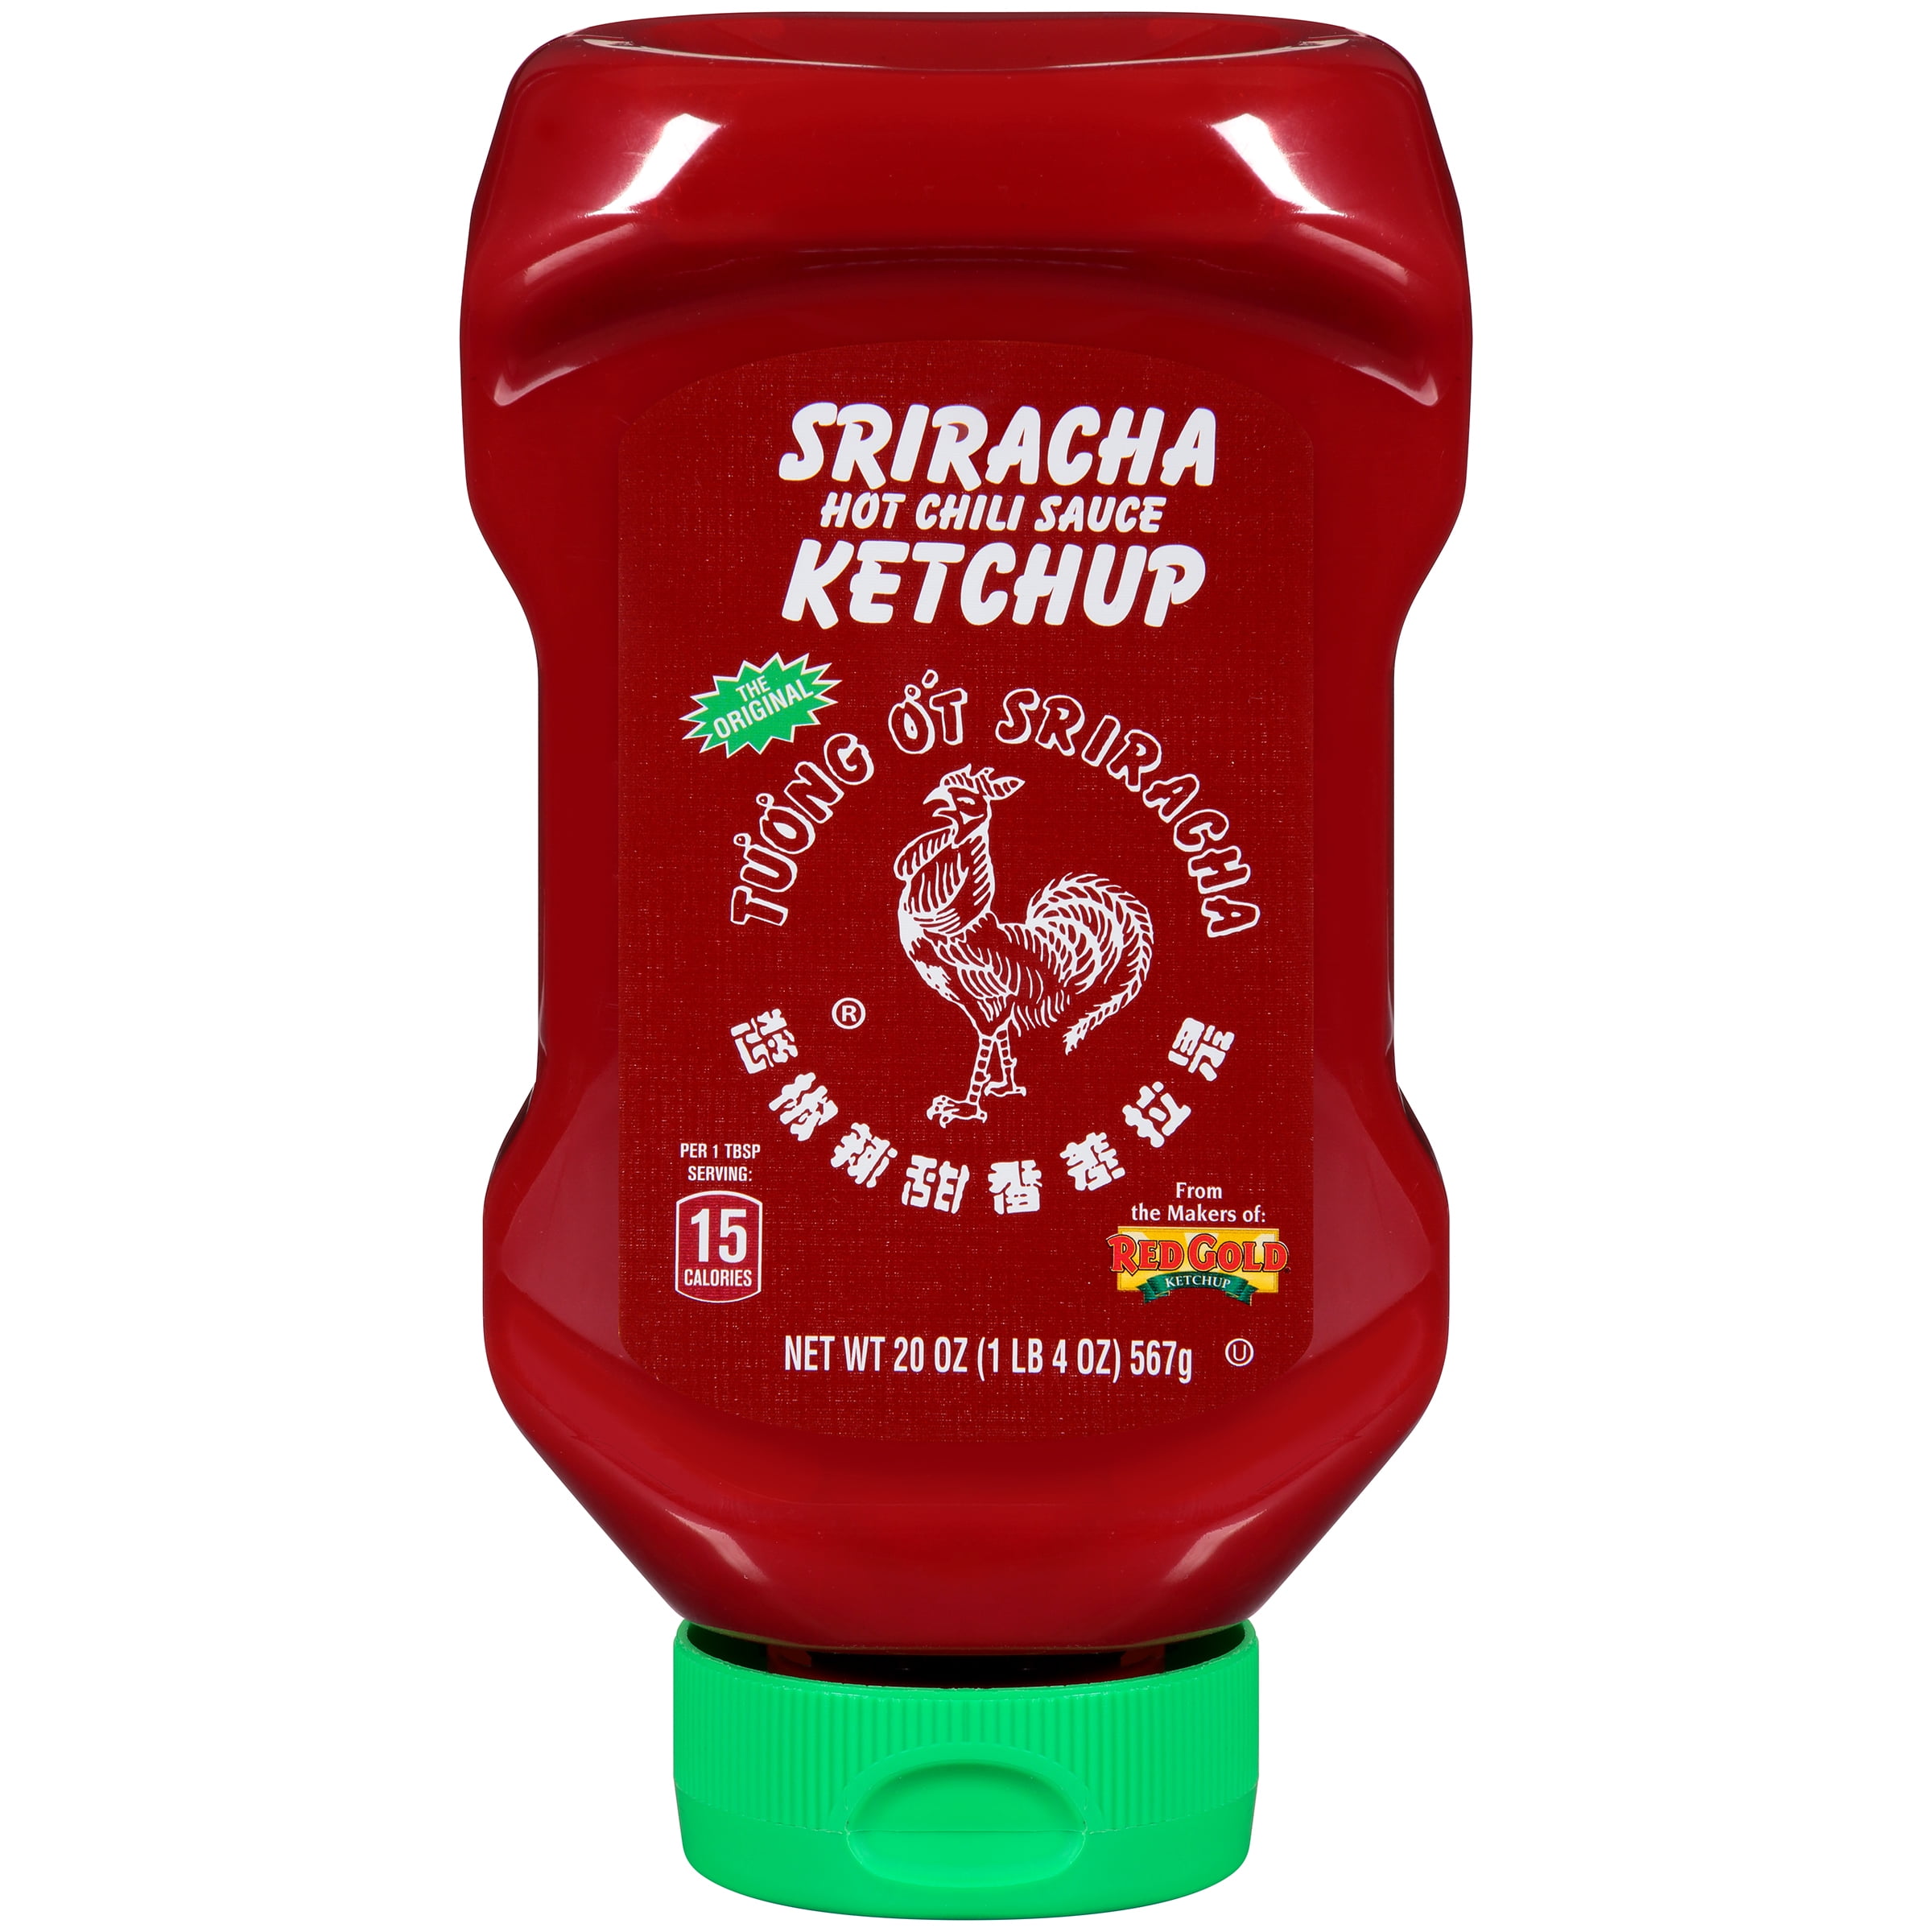 Huy Fong Sriracha Hot Chili Sauce Ketchup 20oz - Walmart.com - Walmart.com